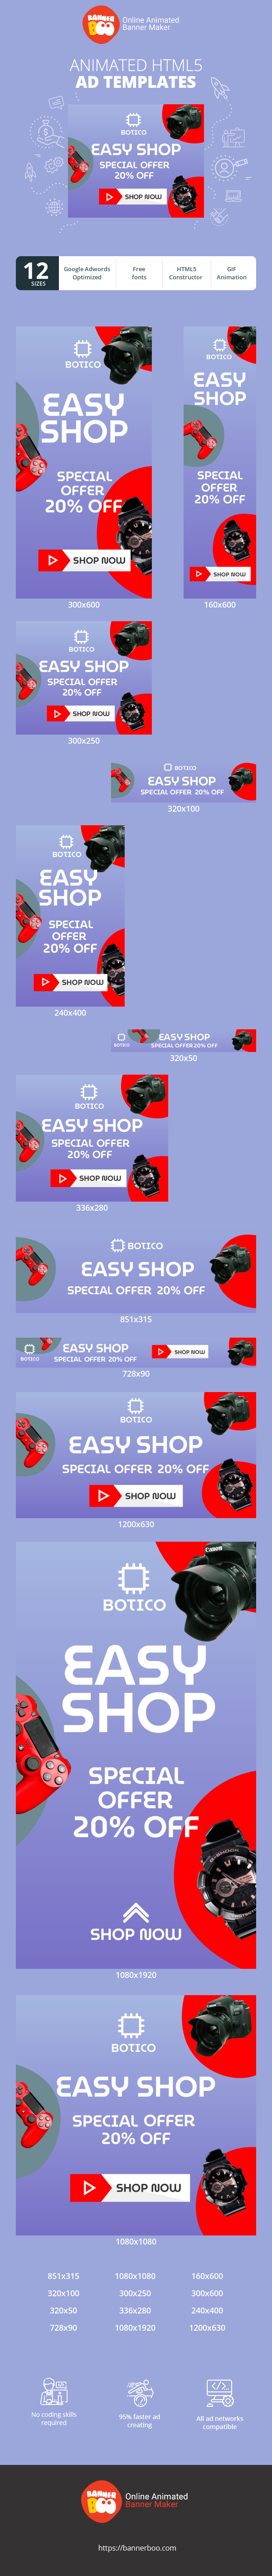 Шаблон рекламного банера — Easy Shop — Special Offer 20% Off